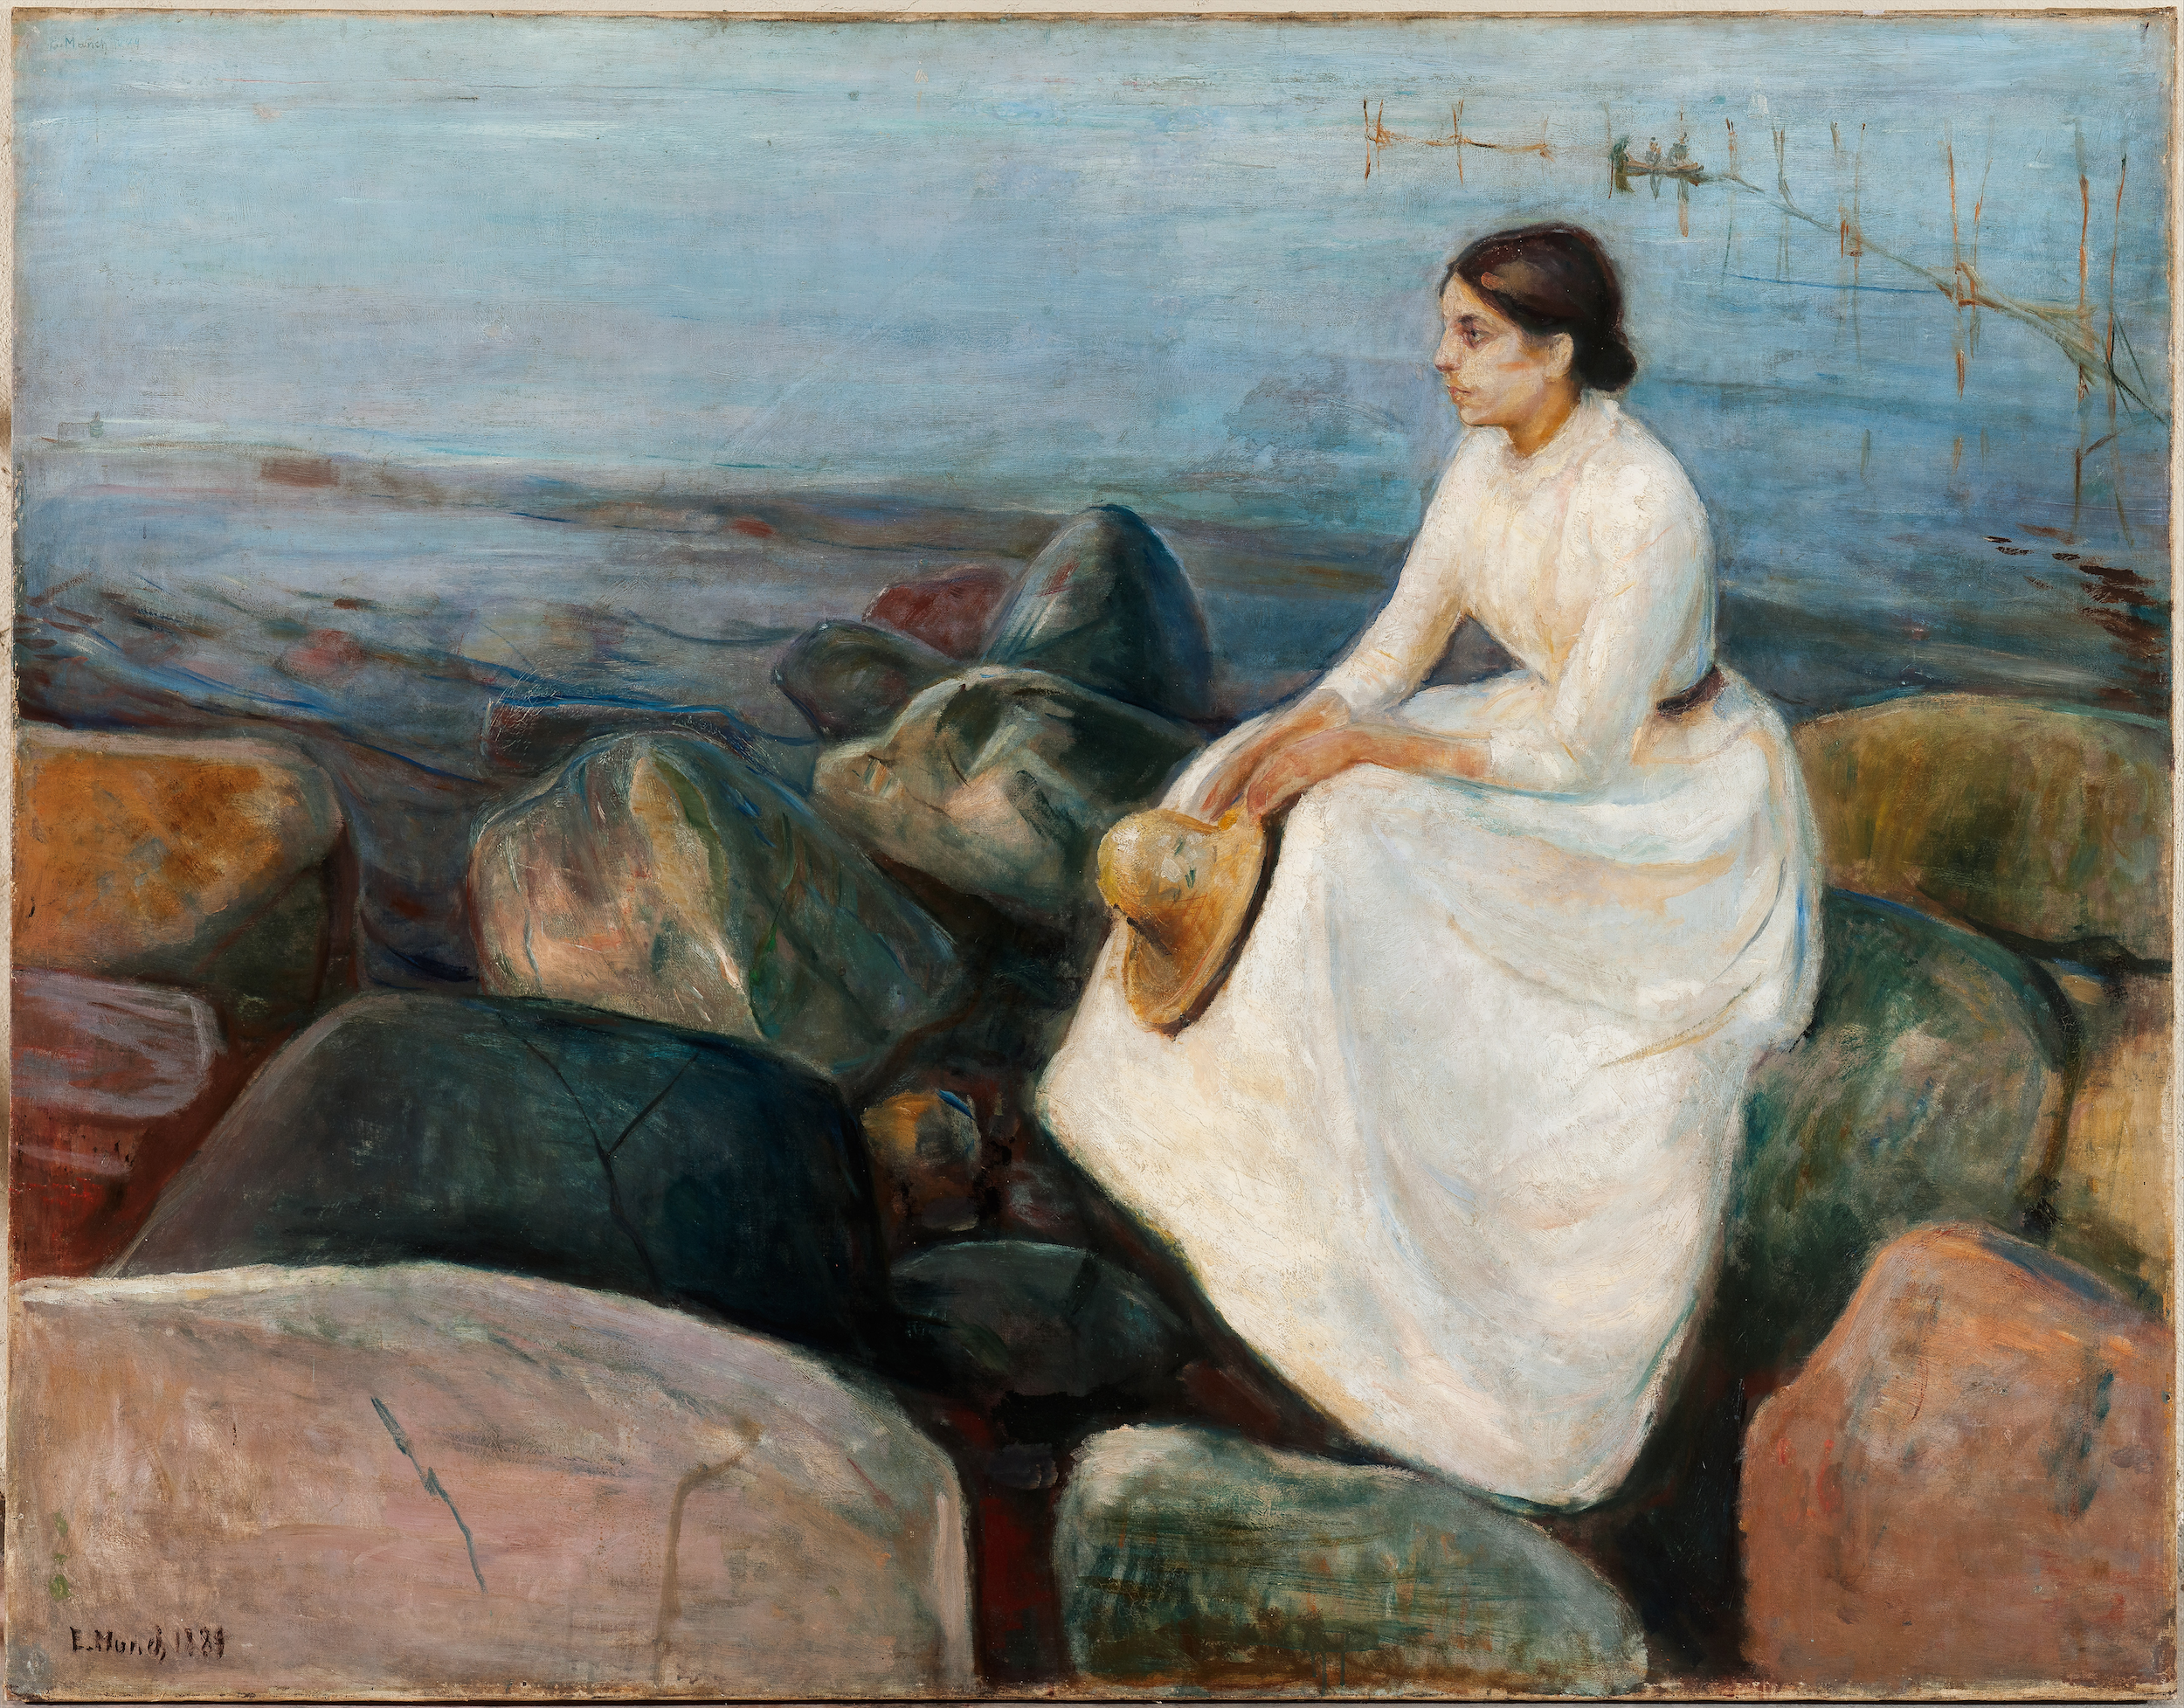 Noche de verano (Inger en la playa) by Edvard Munch - 1889 Europeana